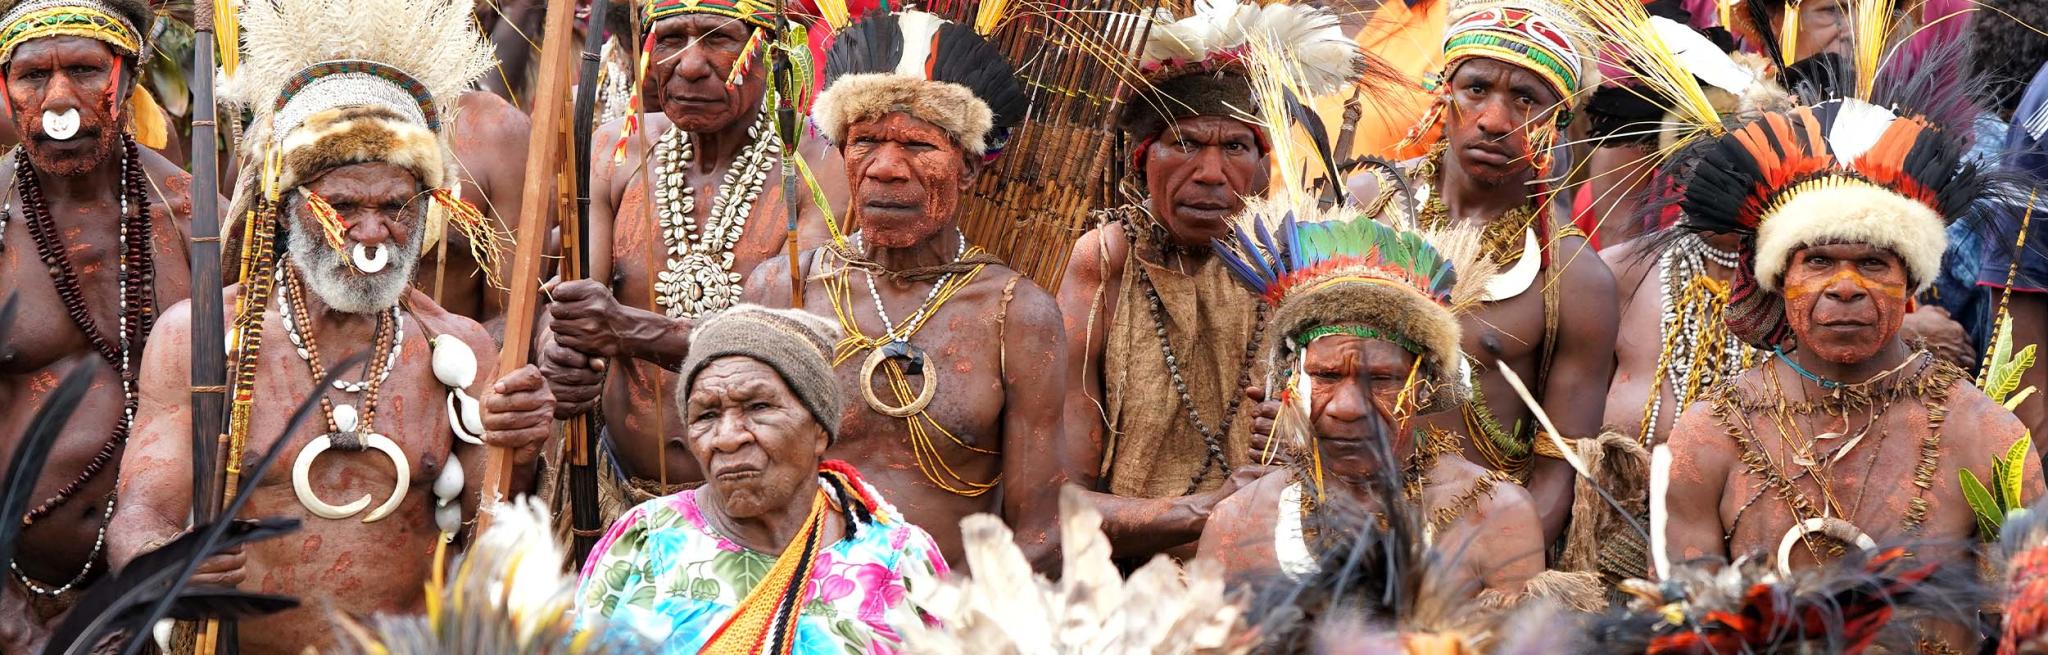 Papua New Guinea people